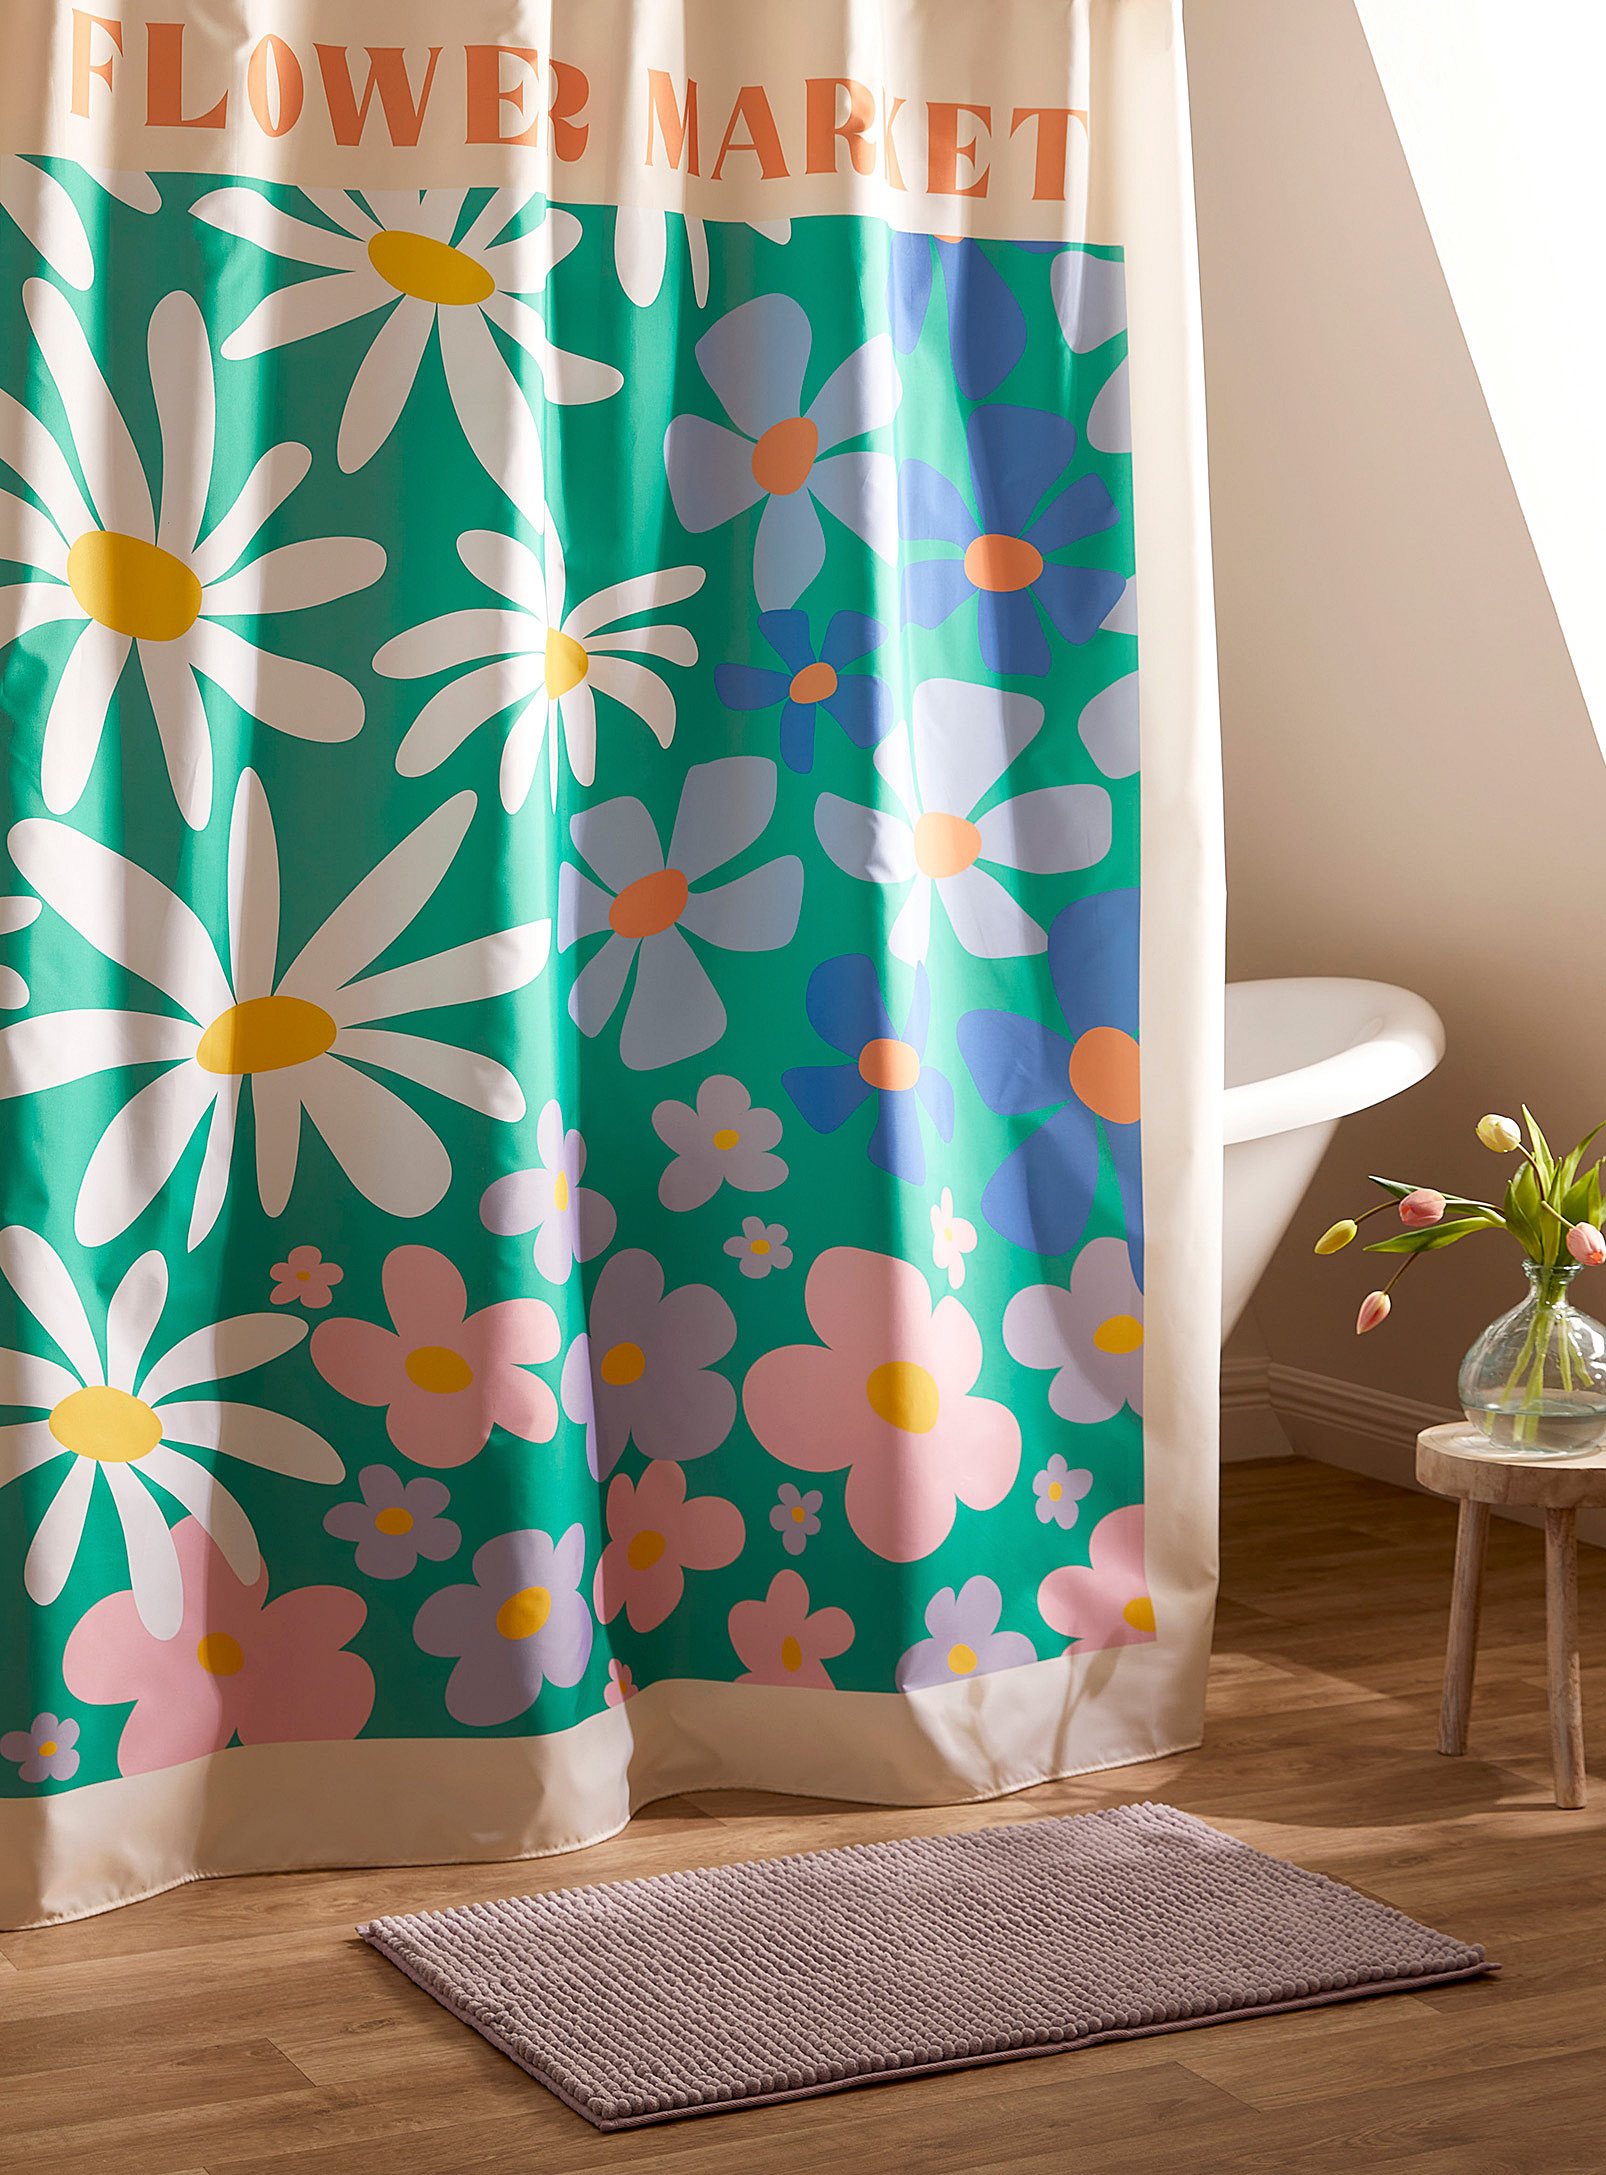 Simons Maison - Flower Market recycled polyester shower curtain